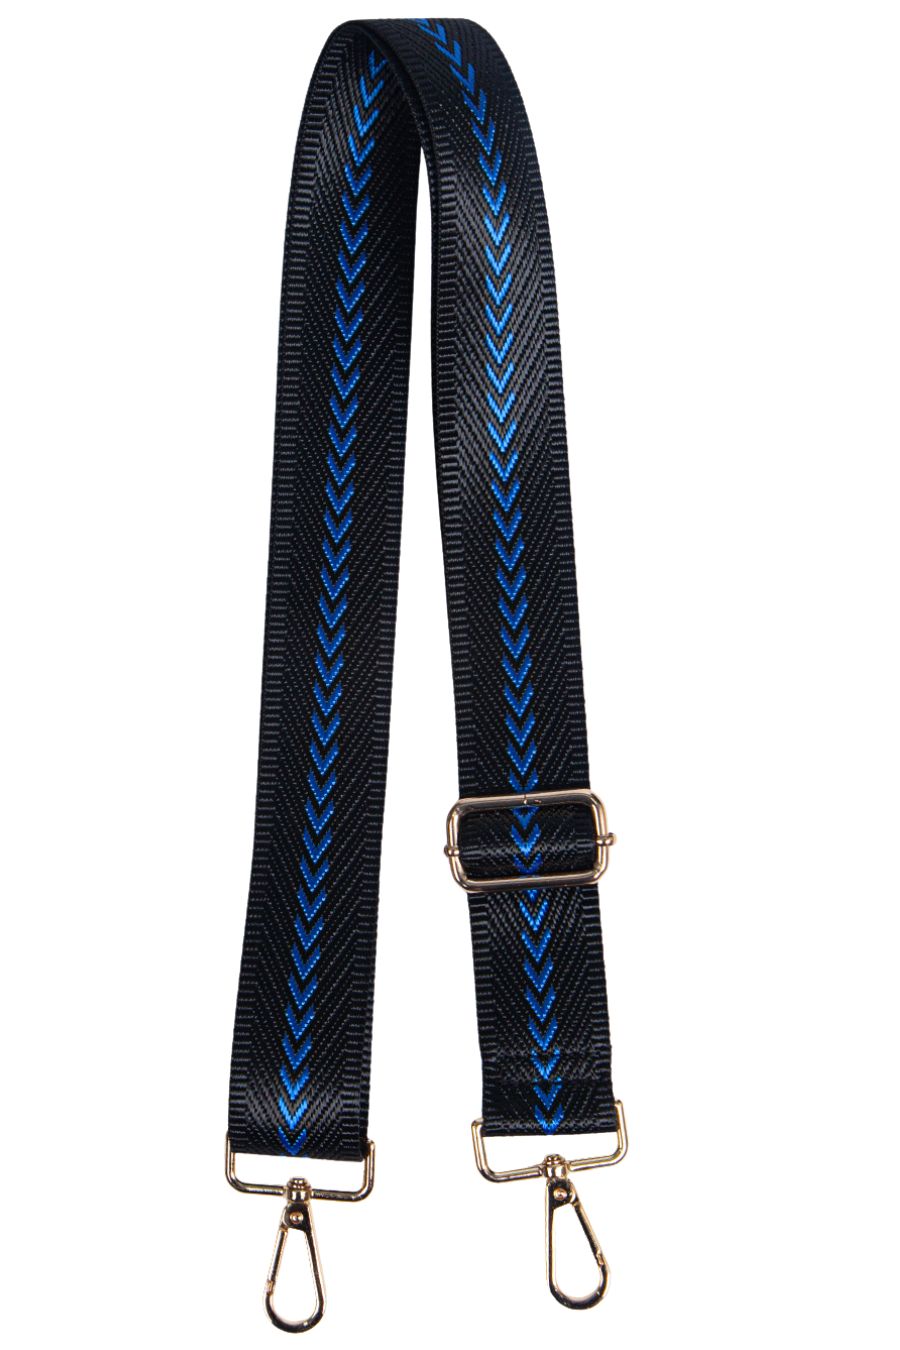 black crossbody bag strap with a blue chevron arrow print. adjustable bag strap with gold hardware